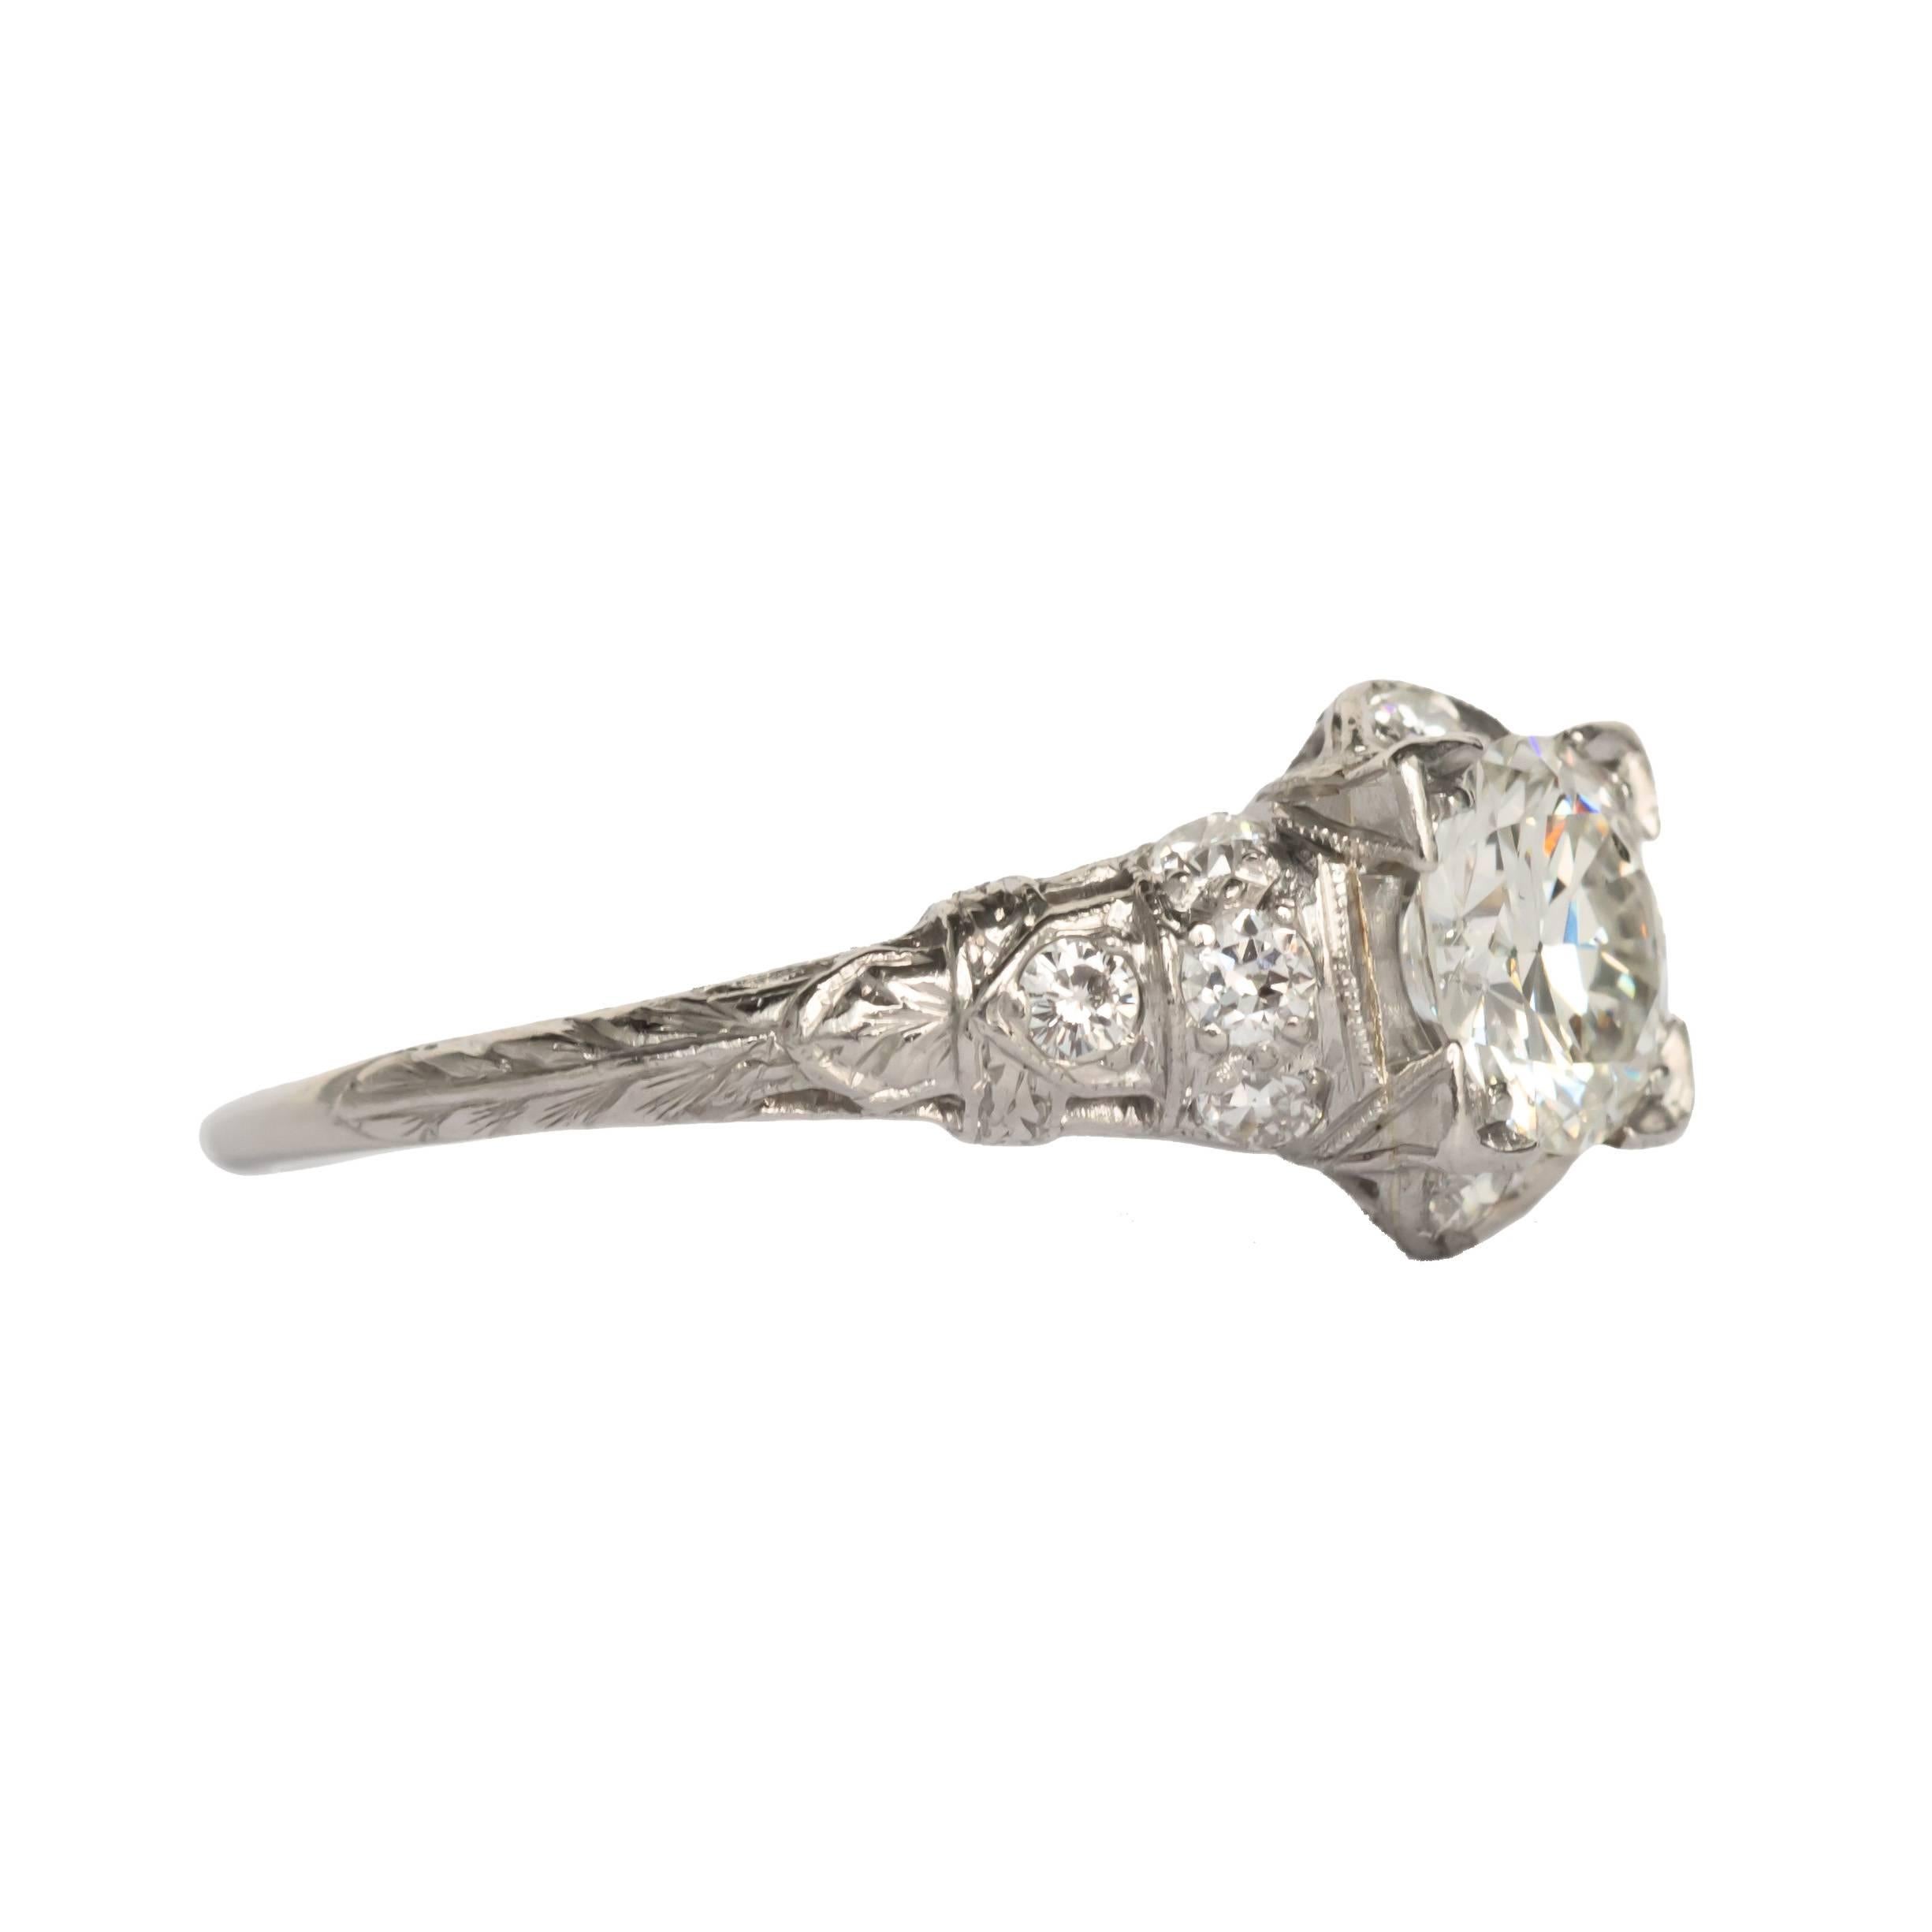 1.05 carat diamond ring